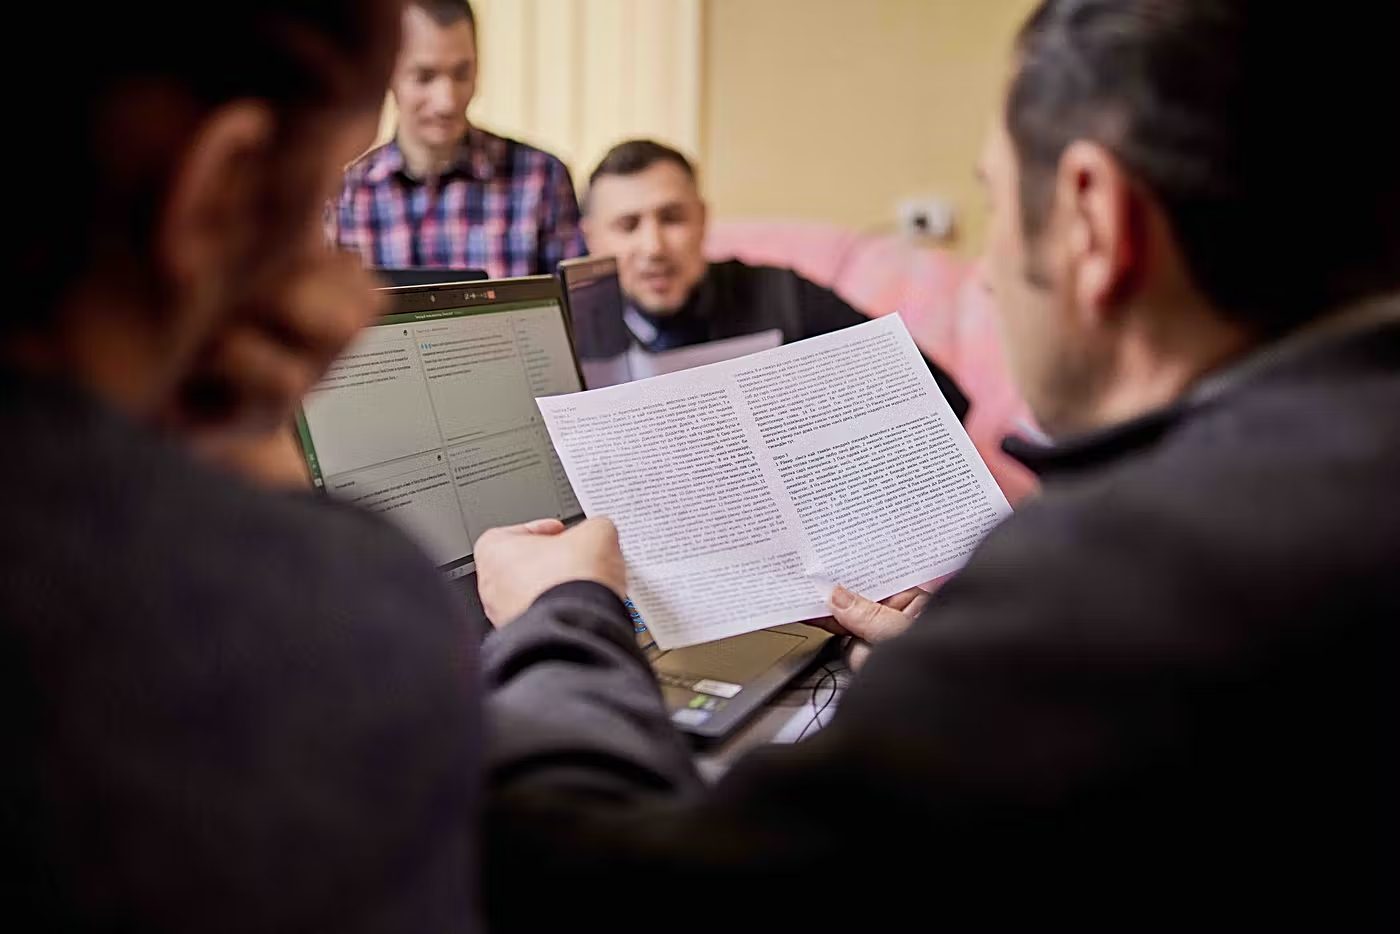 Russian Invasion Sparks New BibleTranslation Work Among Romani People